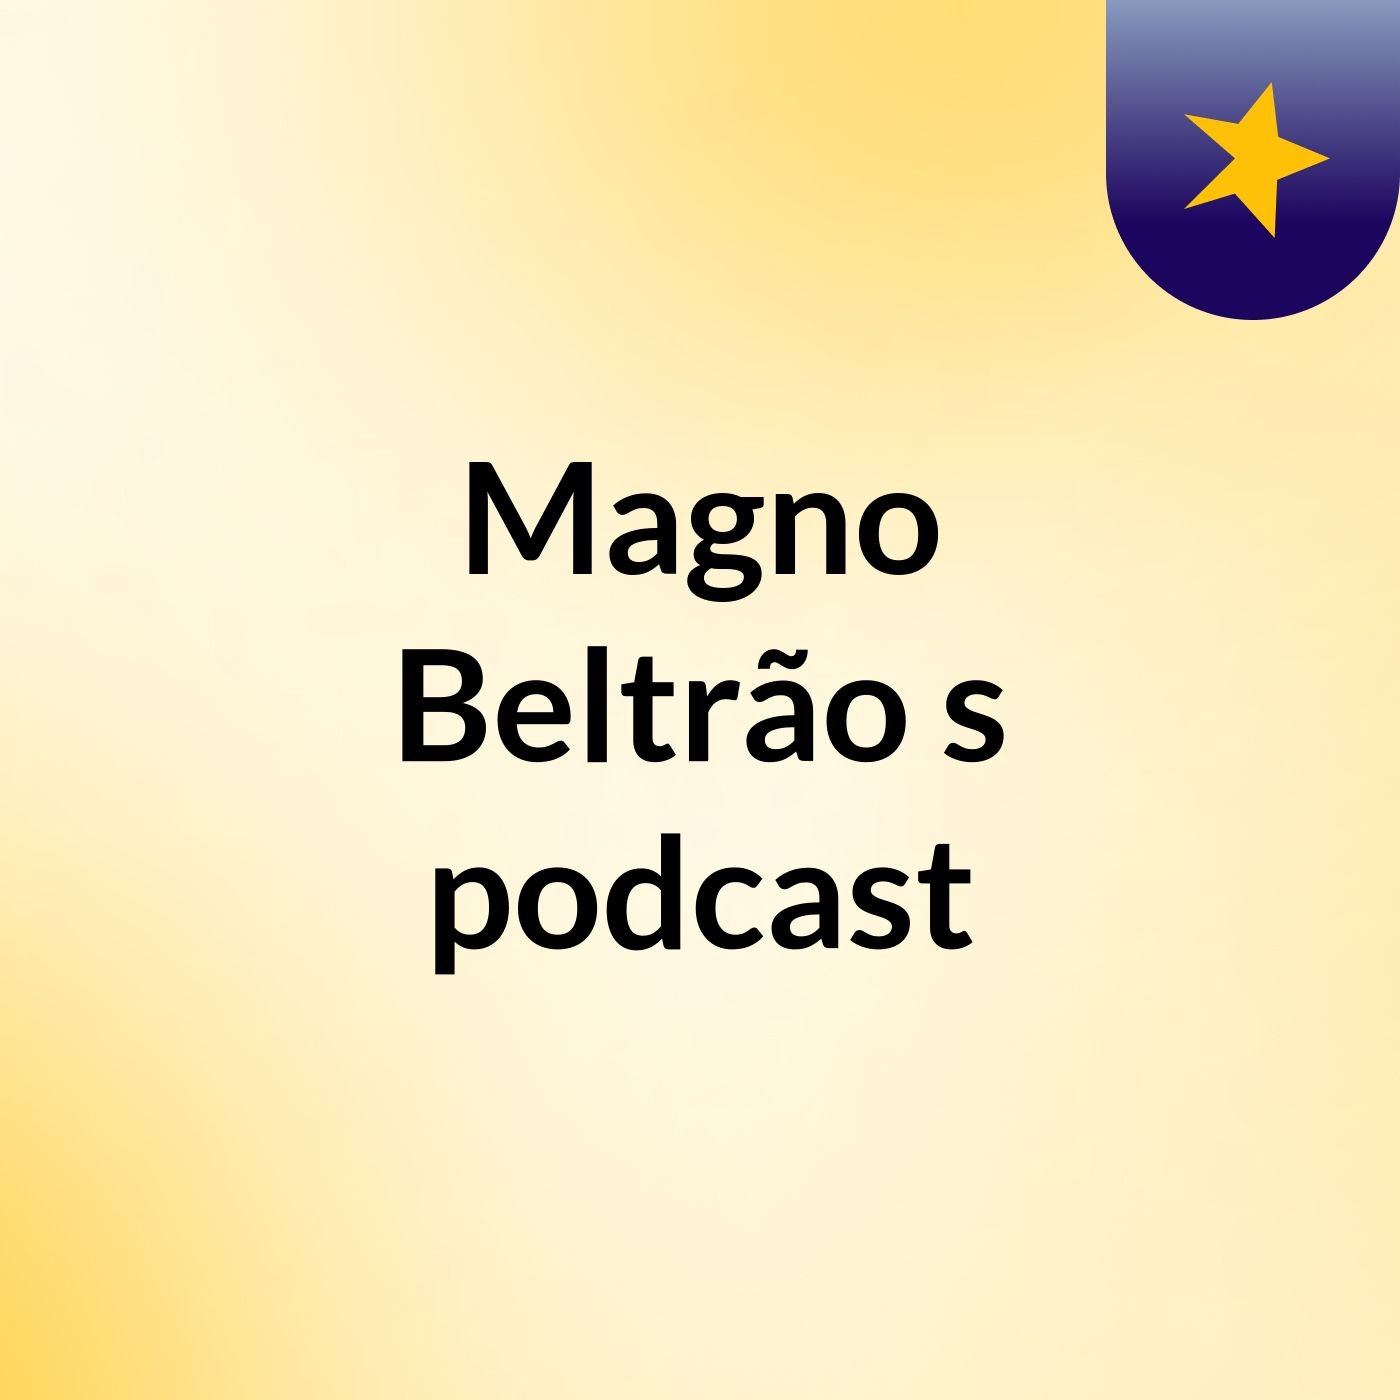 Magno Beltrão's podcast